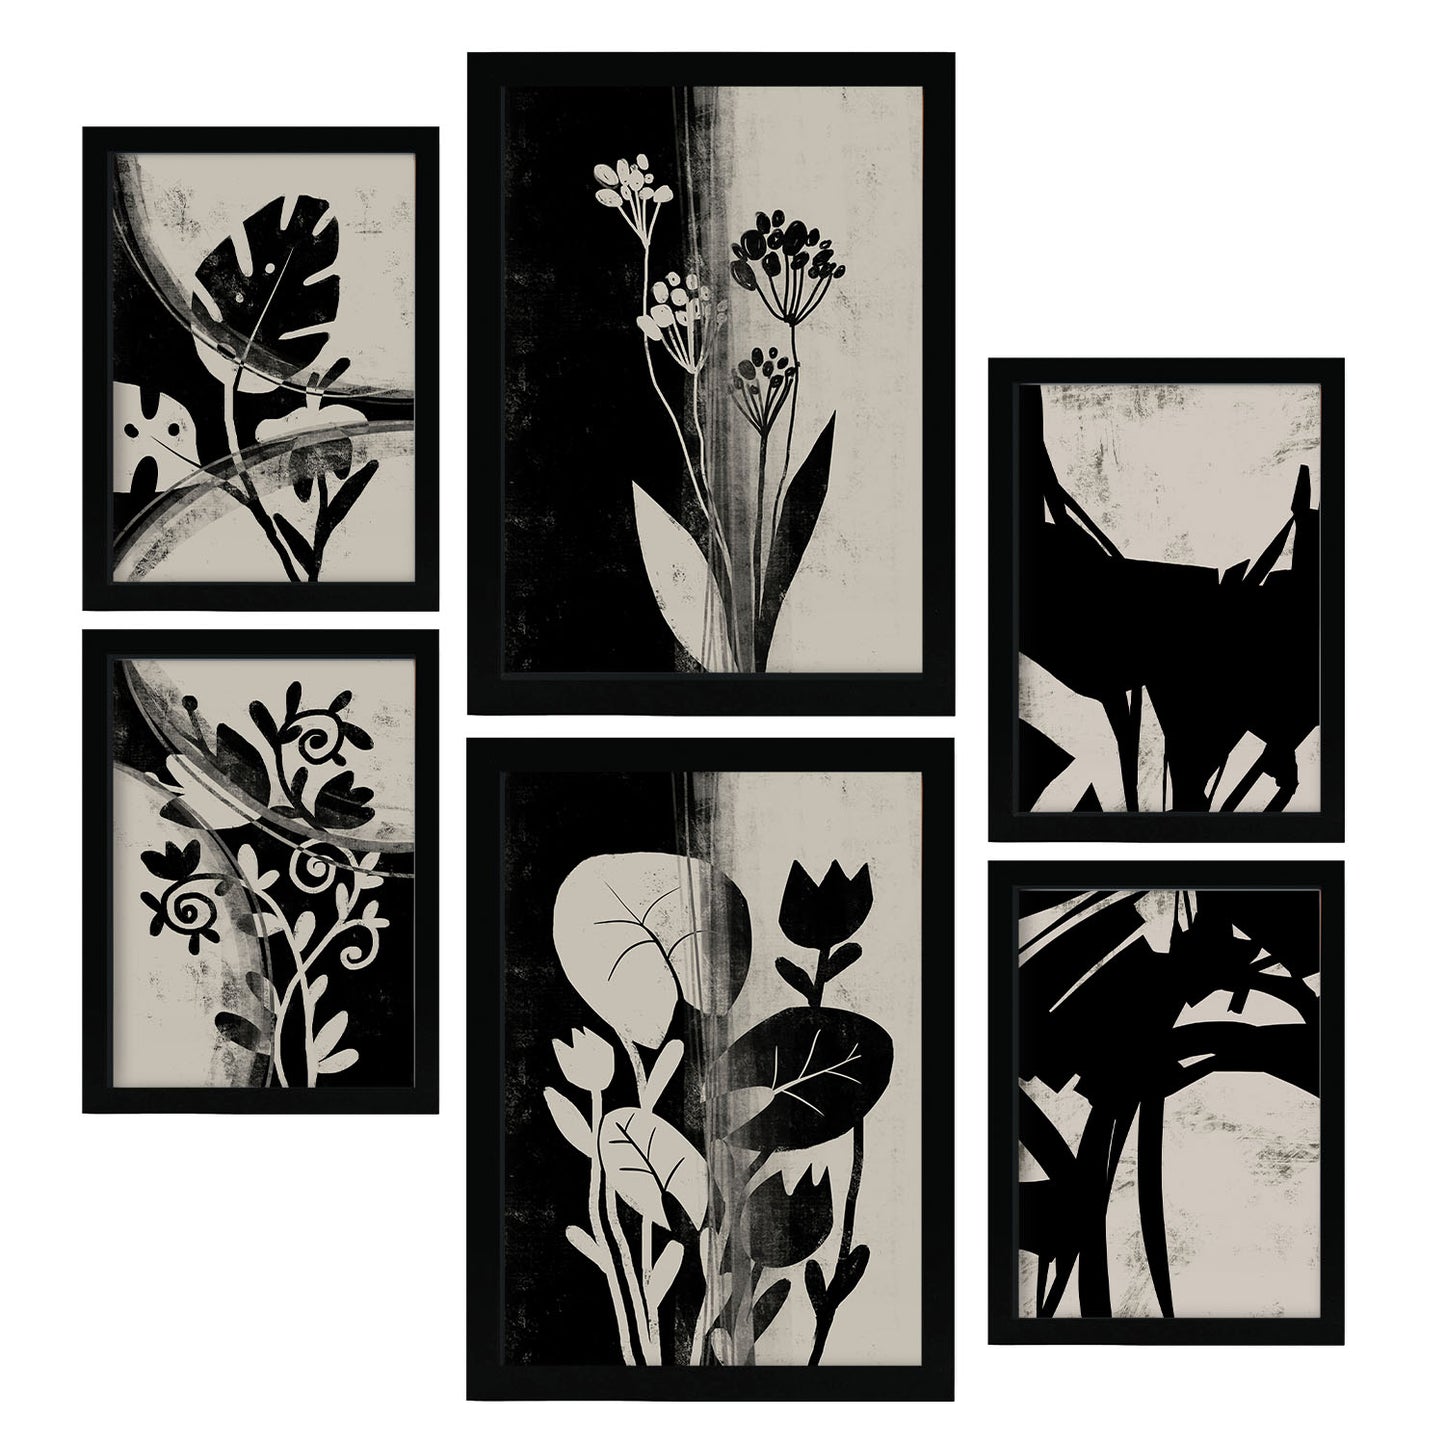 Conjunto Nacnic de 6 Láminas Abstractas de Flores